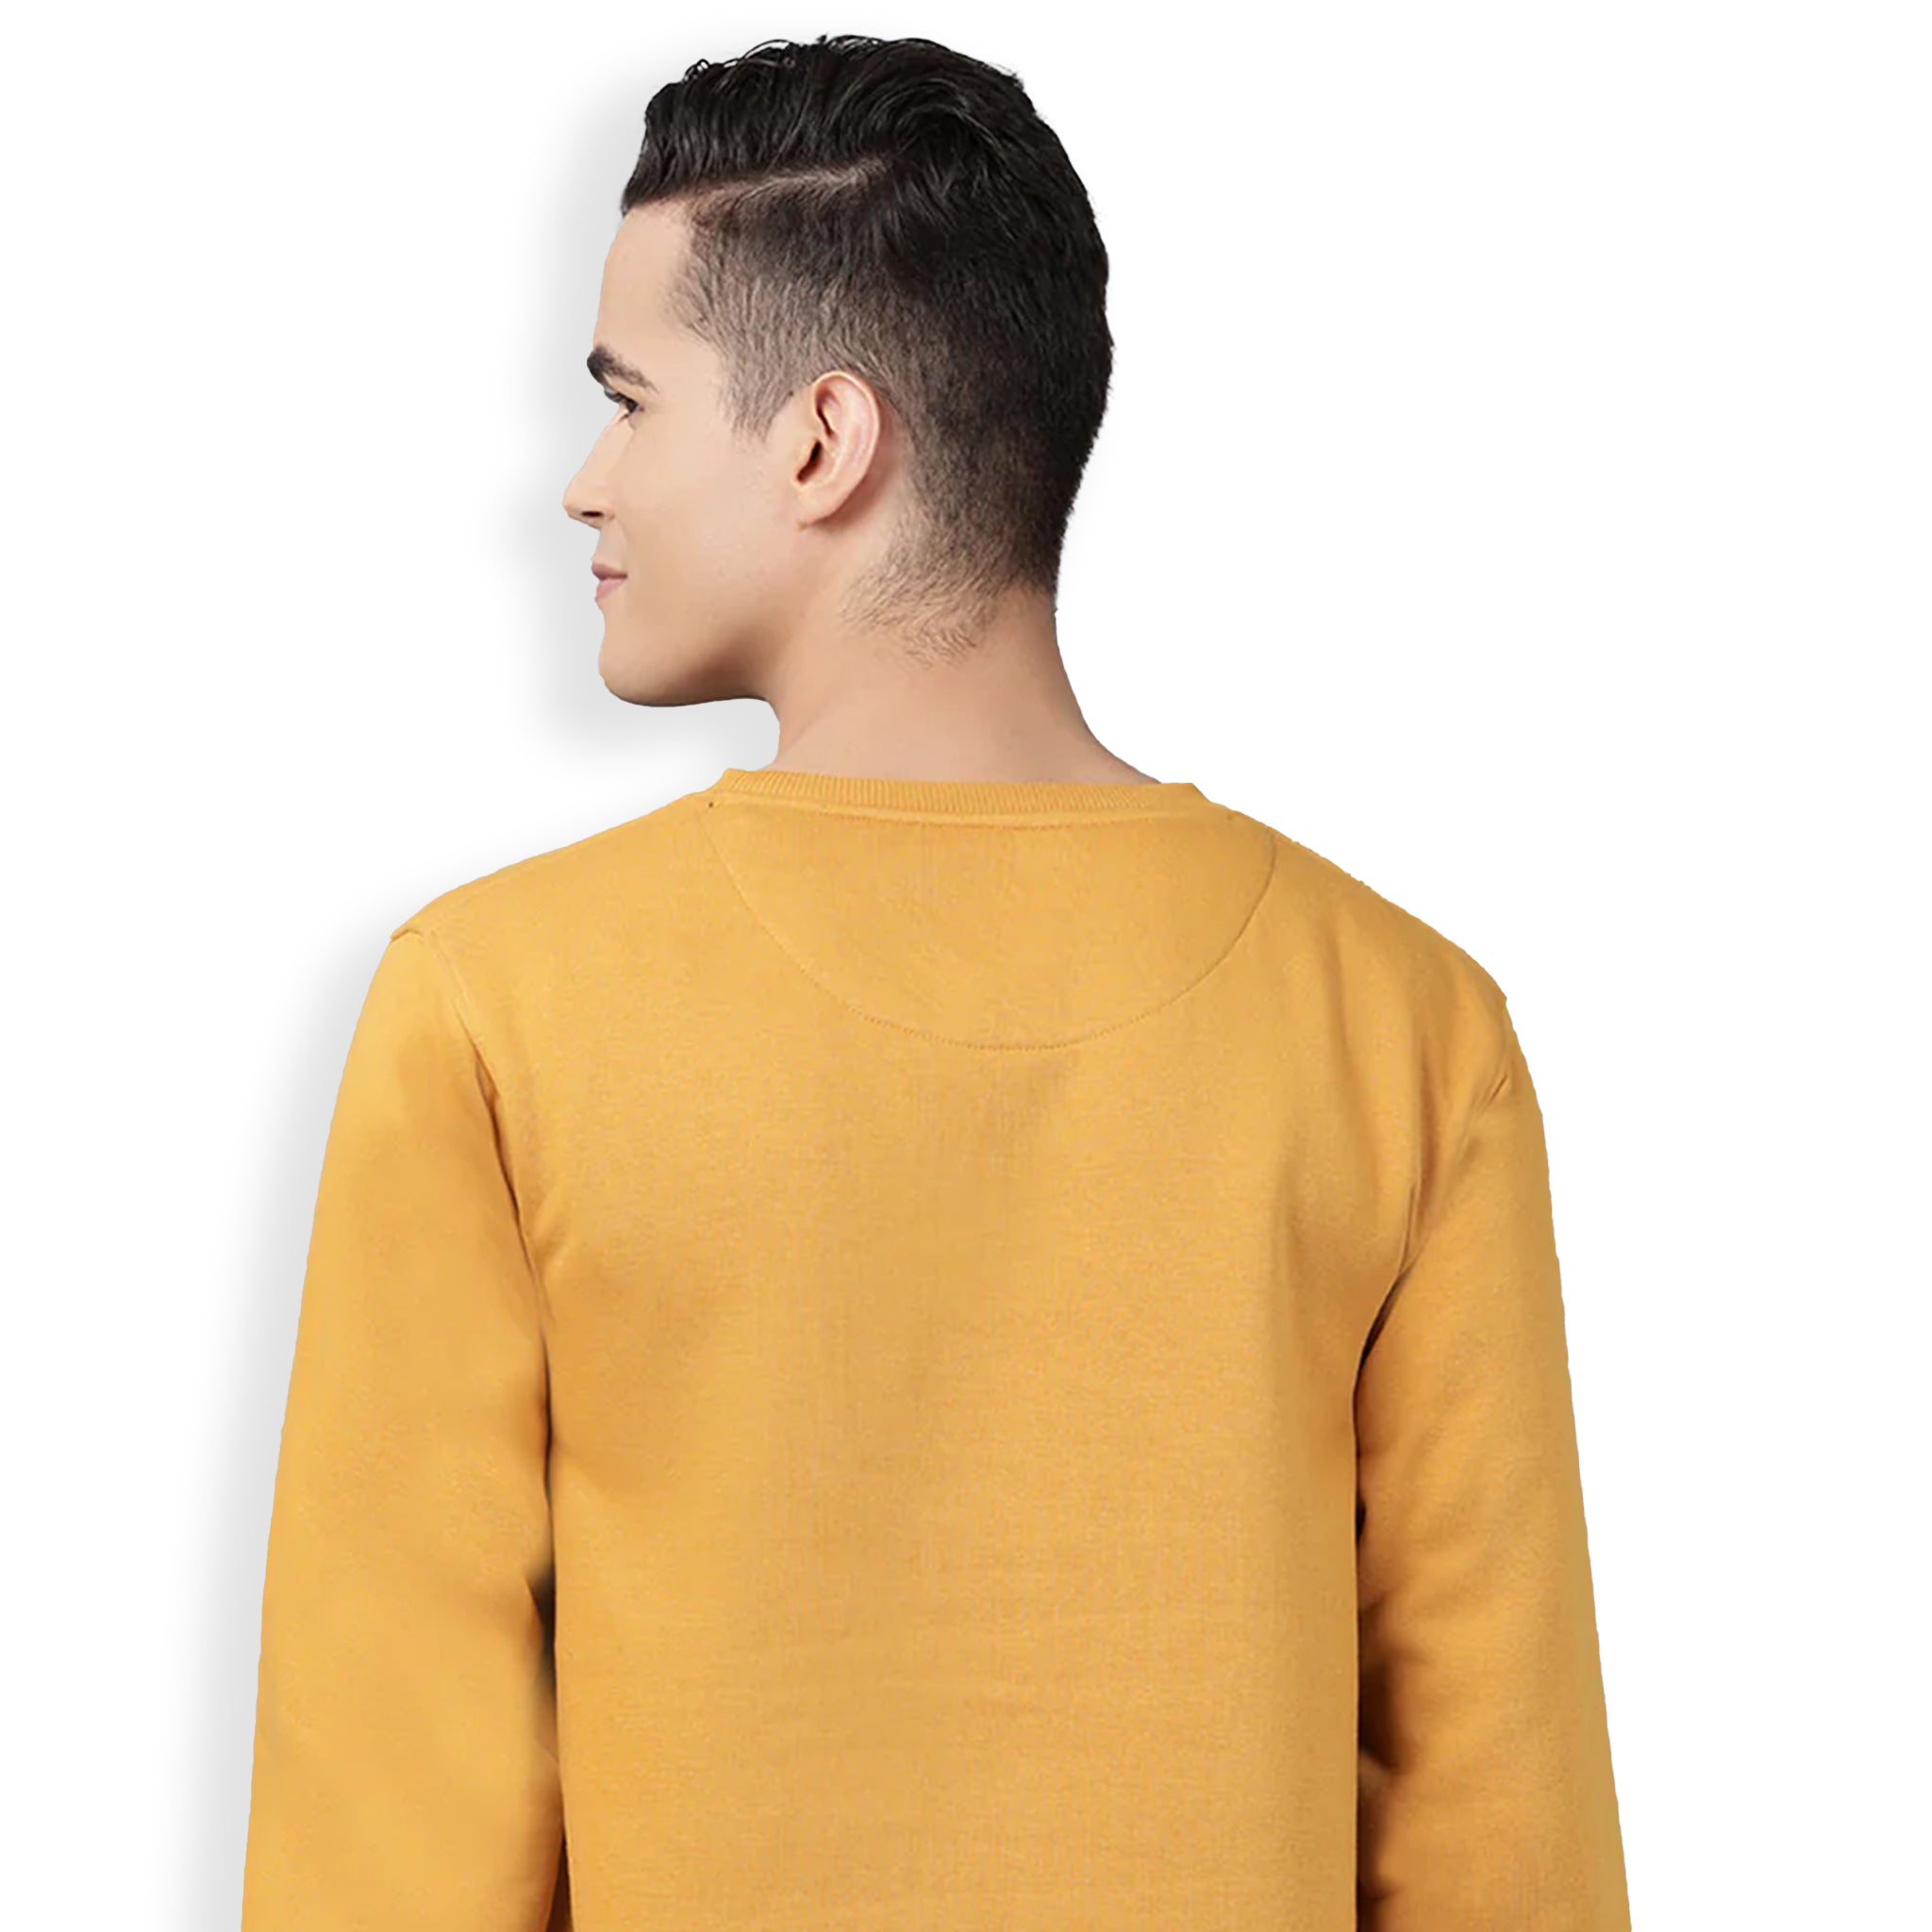 Bizzar's Mustard Yellow Sweatshirt